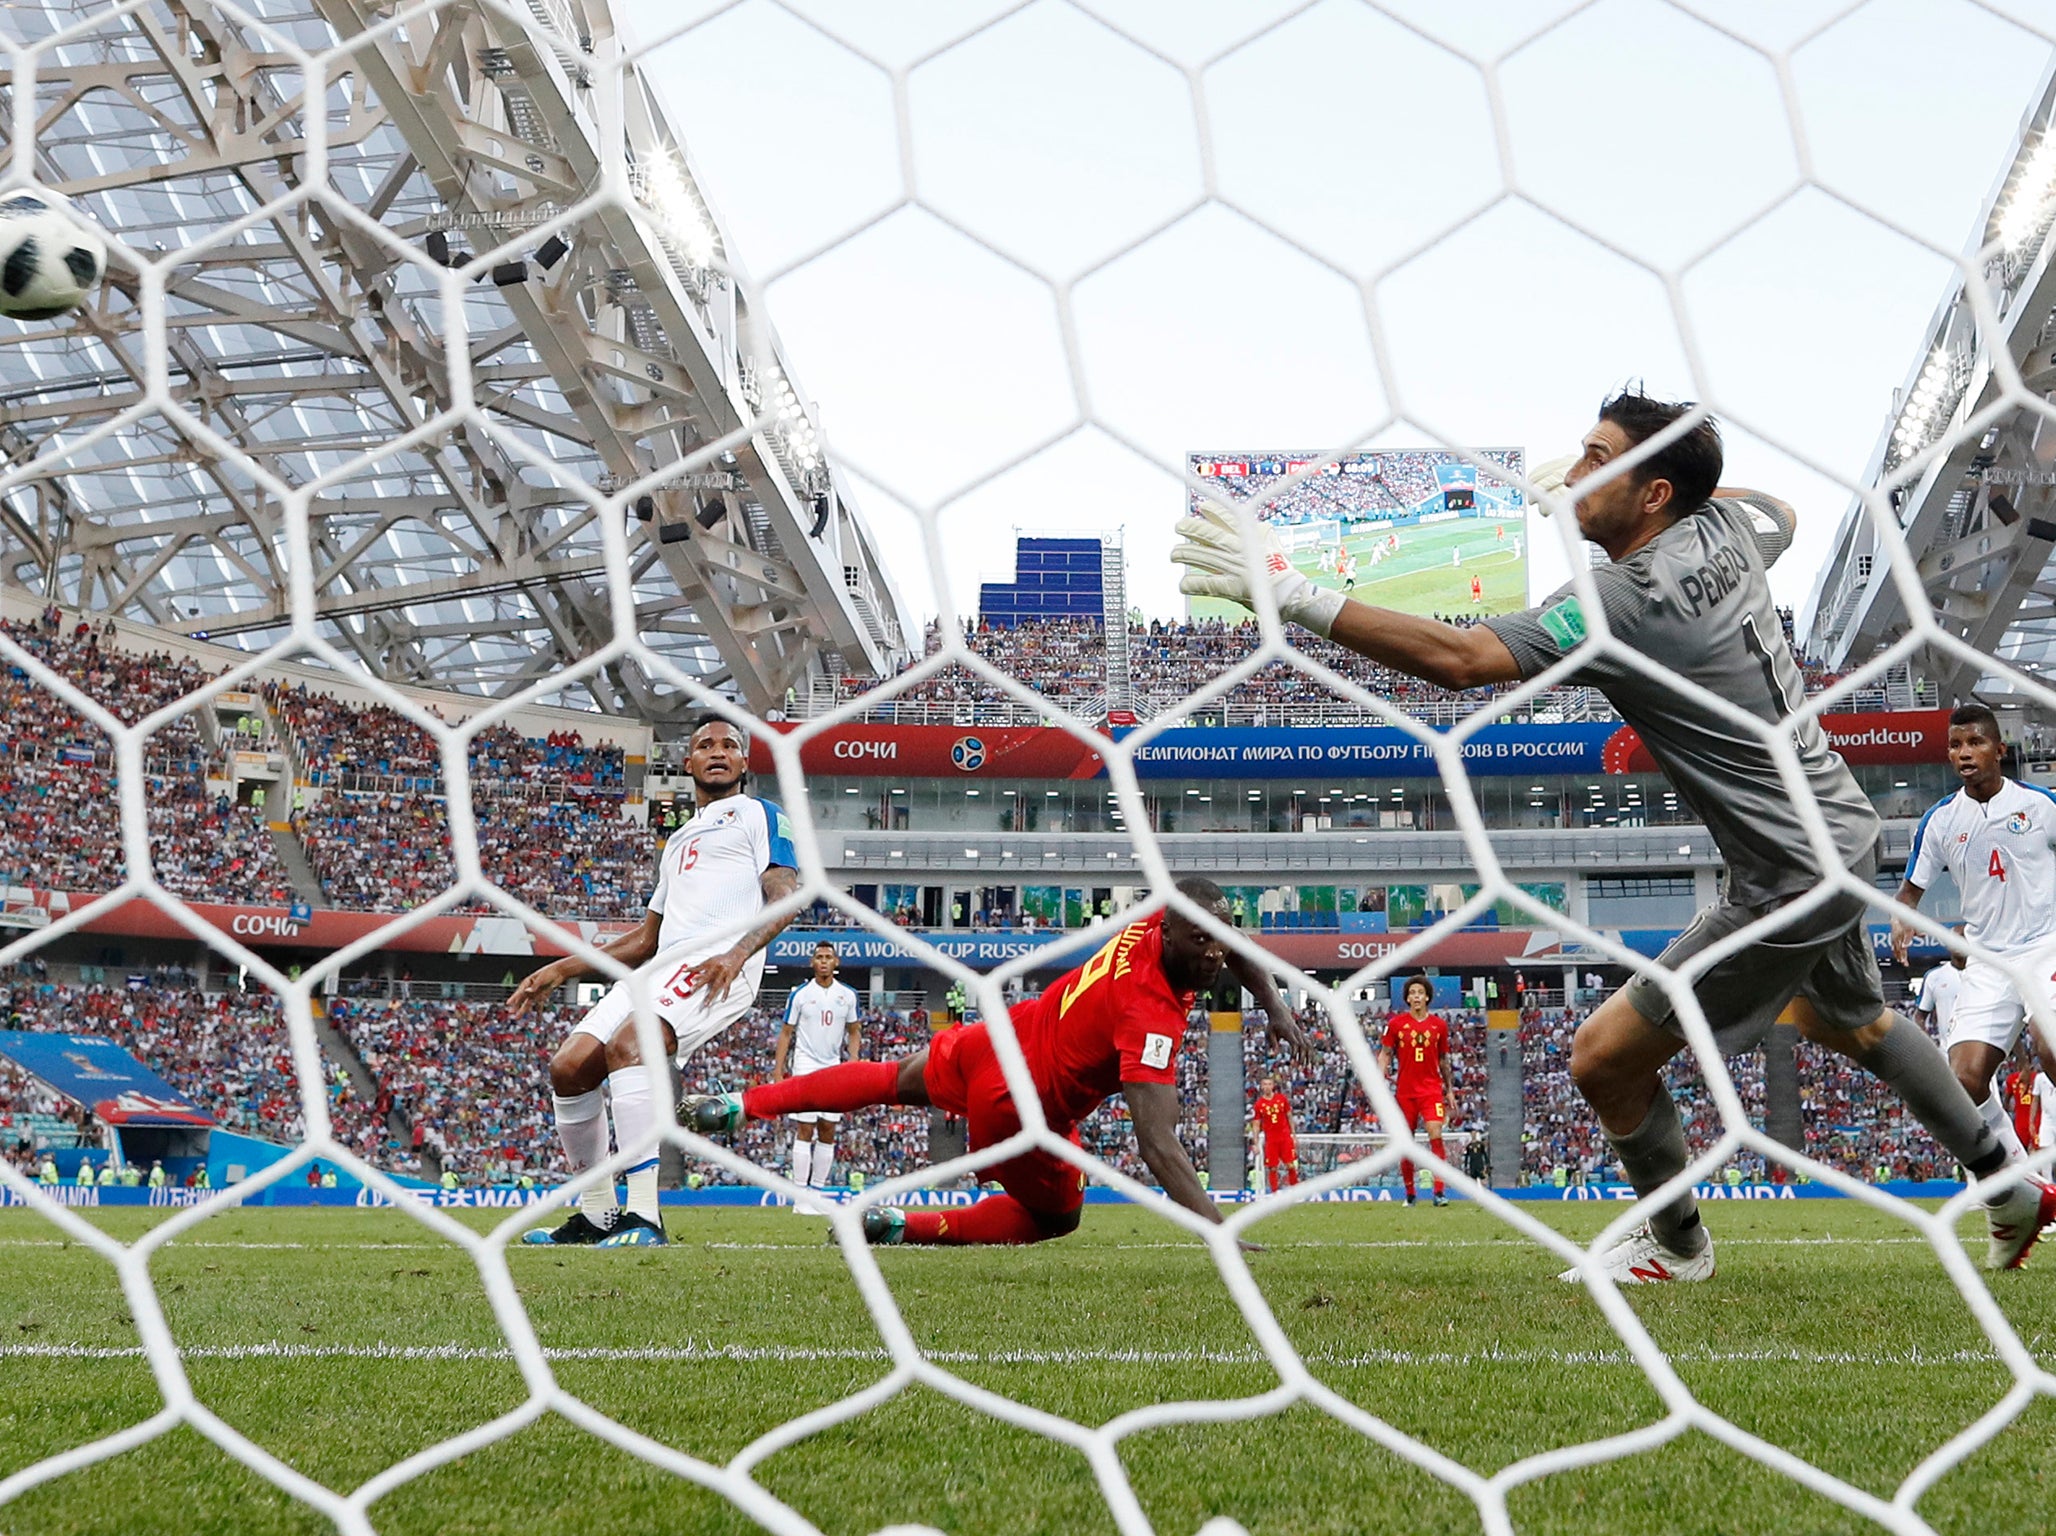 Romelu Lukaku doubled Belgium's lead